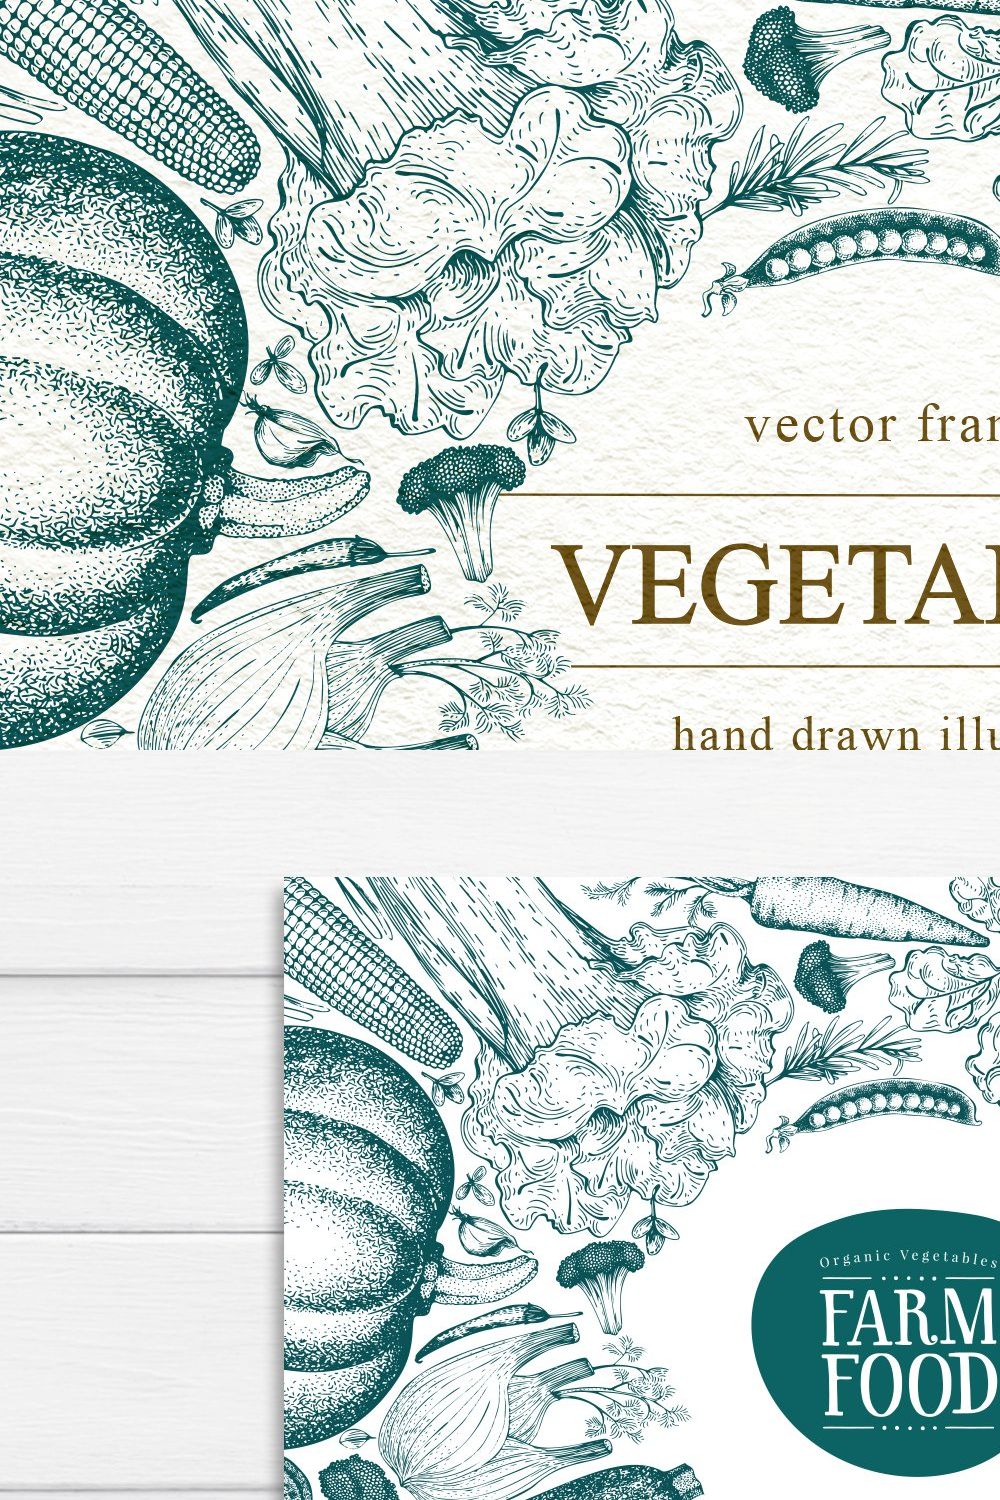 Vegetable Vector Frame pinterest preview image.